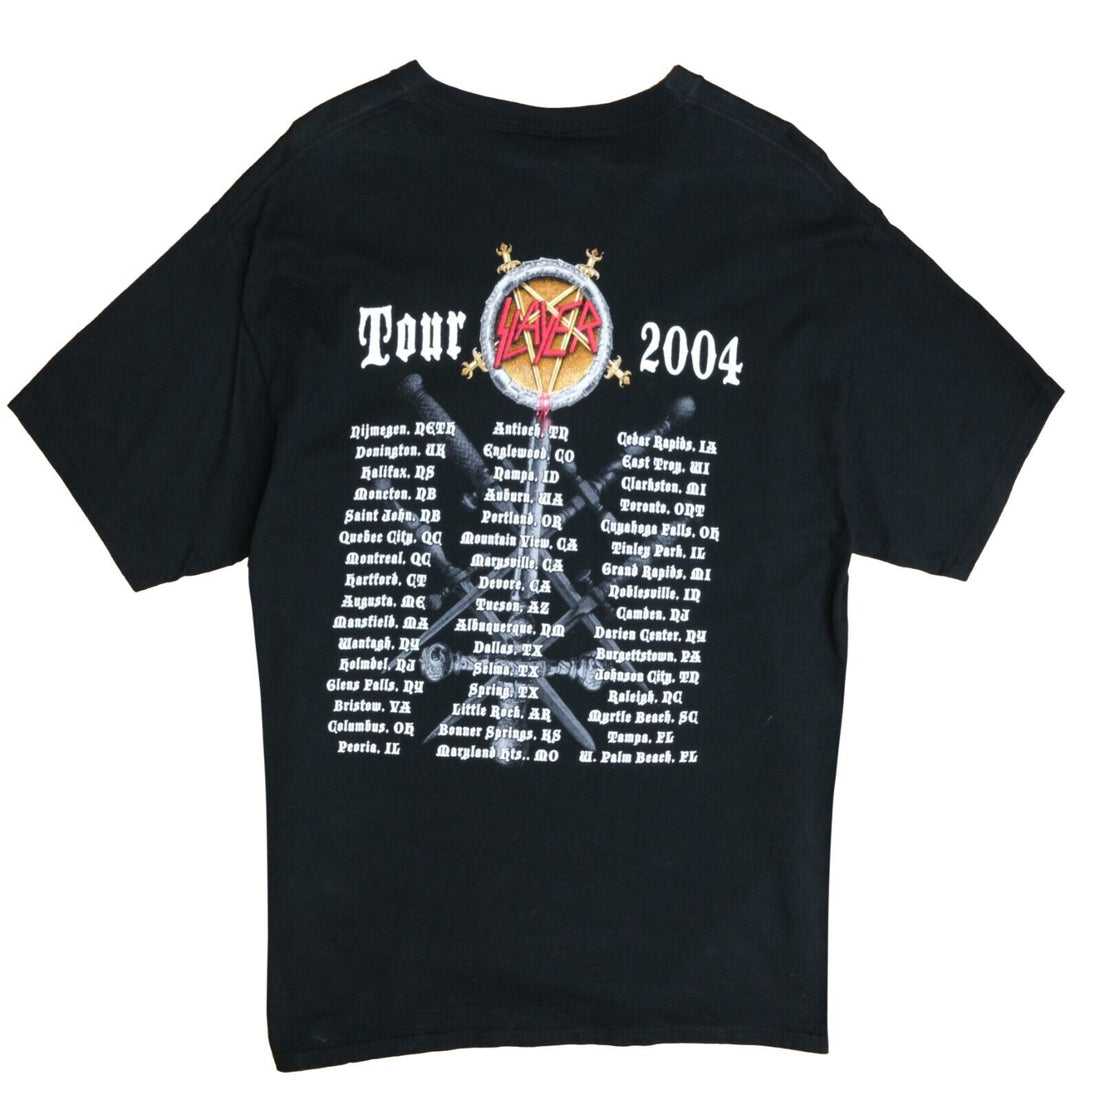 Vintage Slayer Tour T-Shirt Size Large Black Band Tee 2004